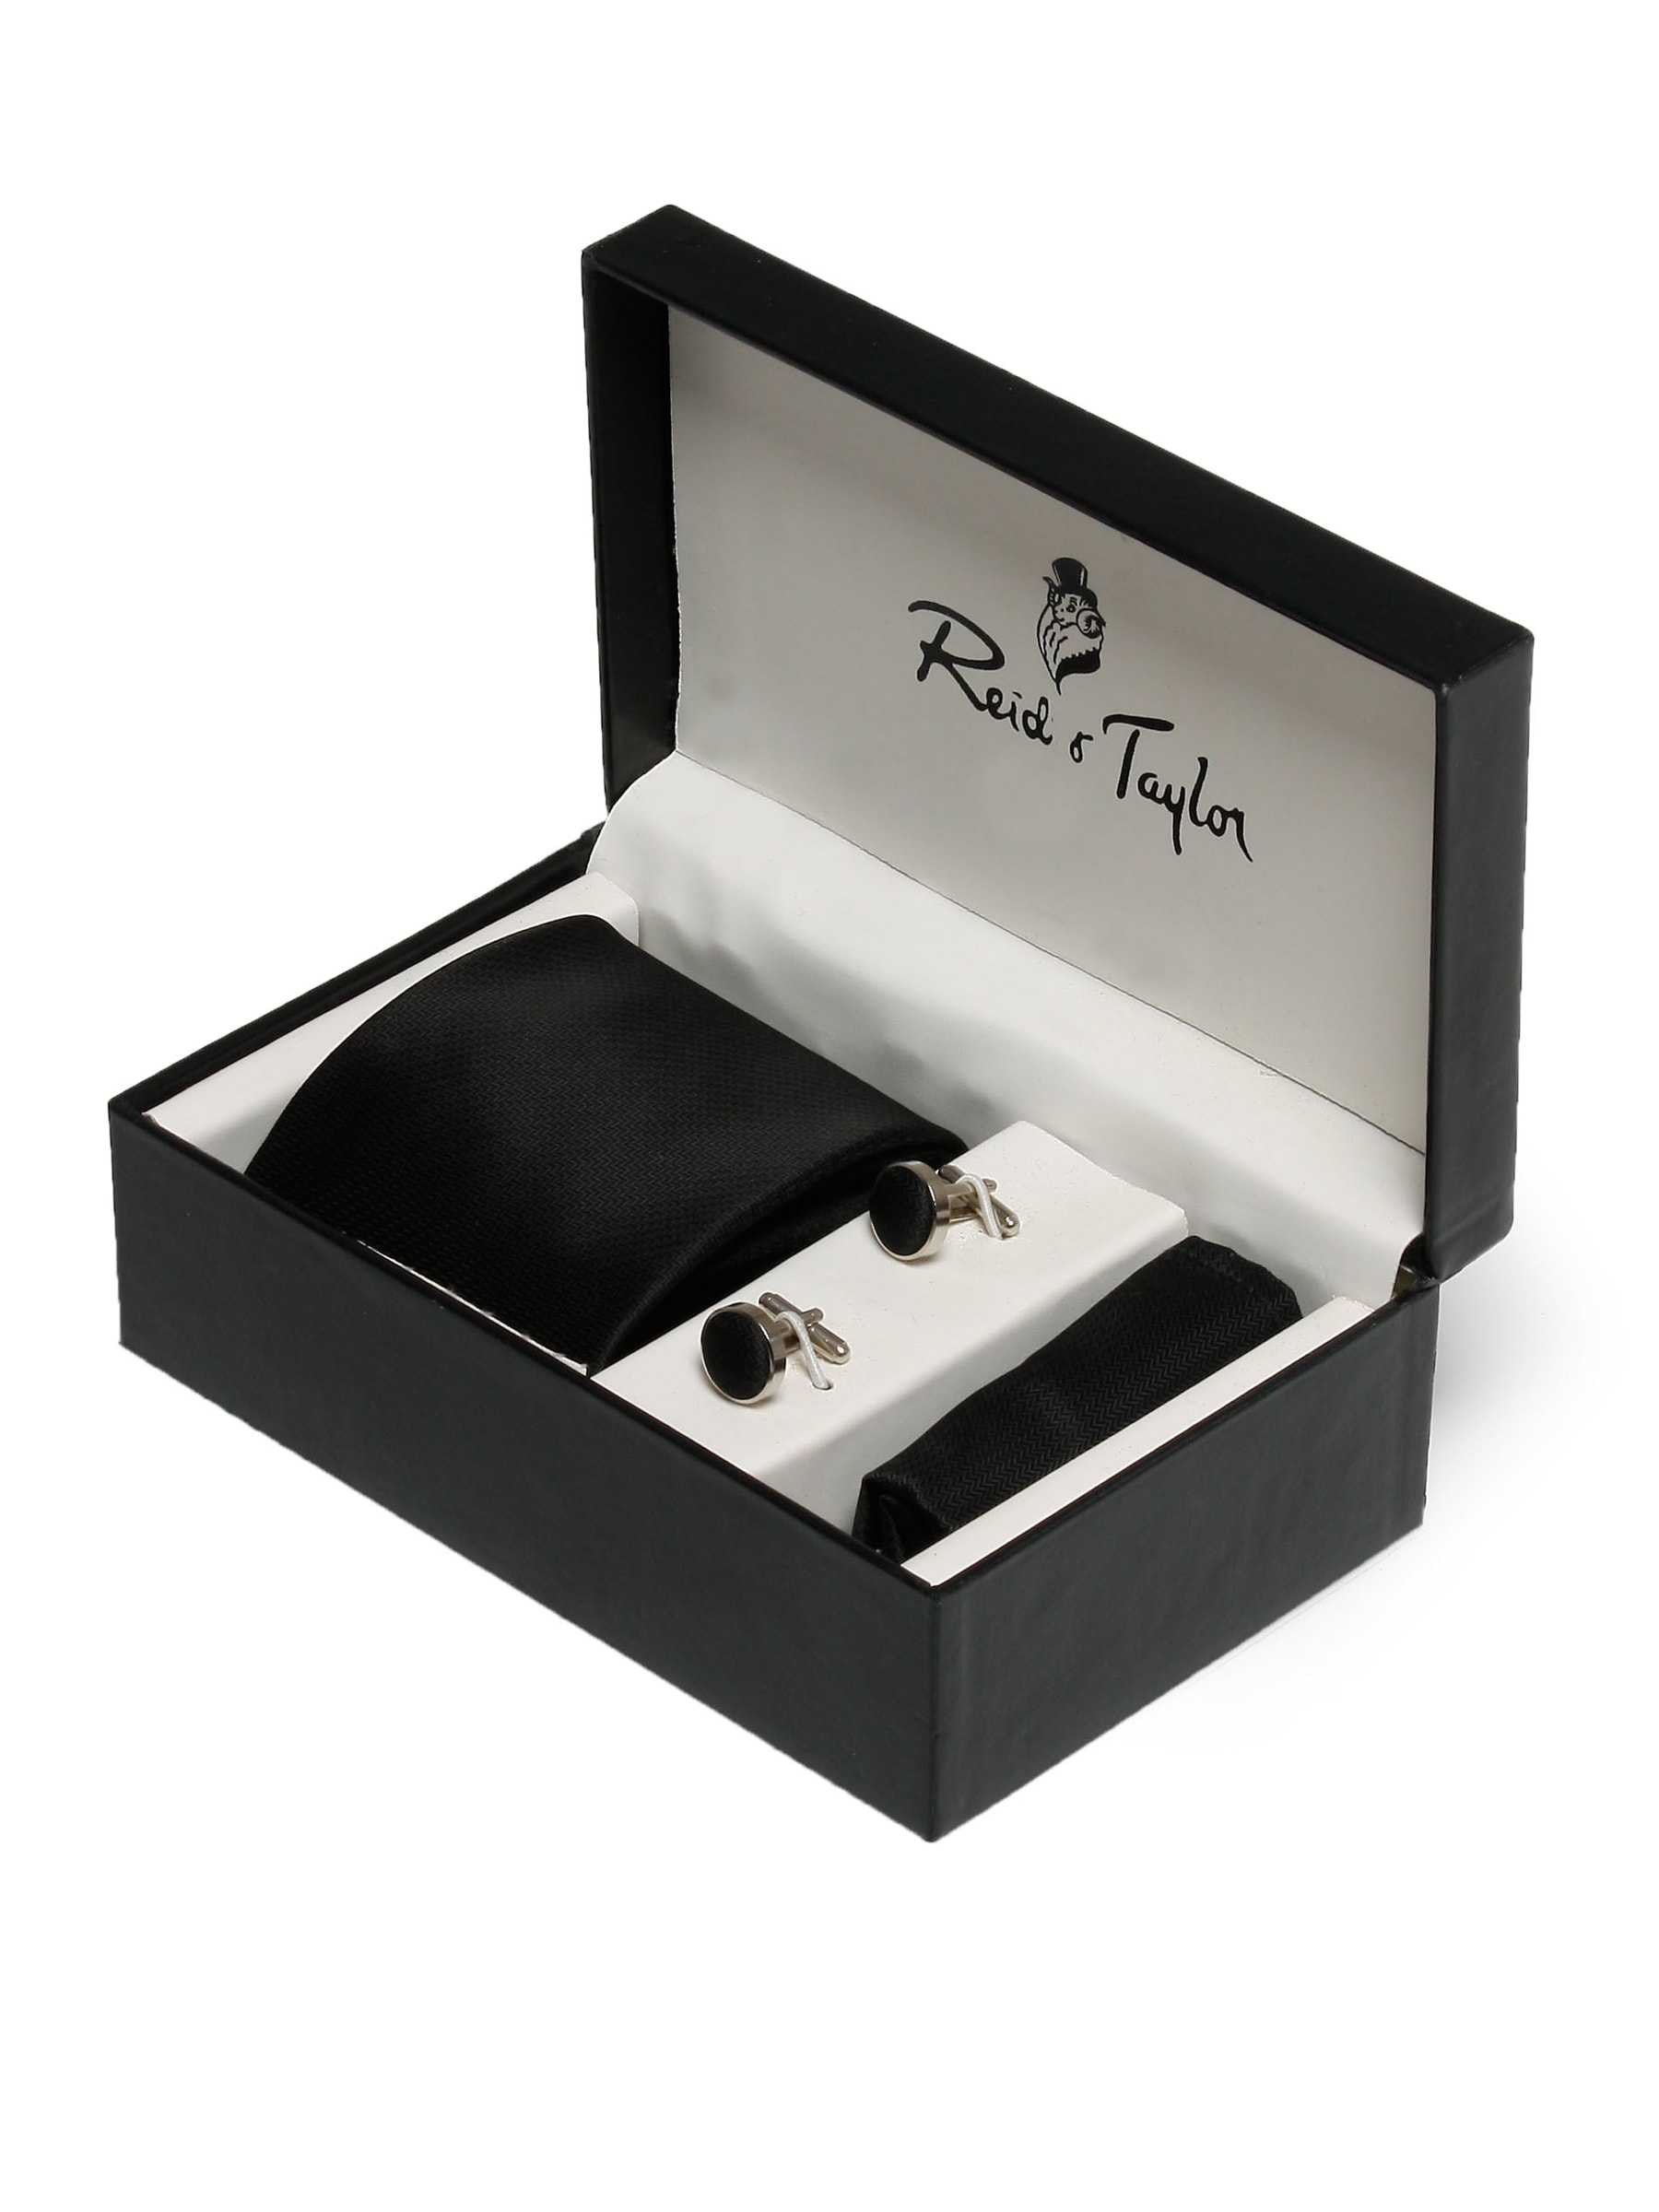 Reid & Taylor Men Formal Black Tie+Cufflink+Pocket square - Combo Pack